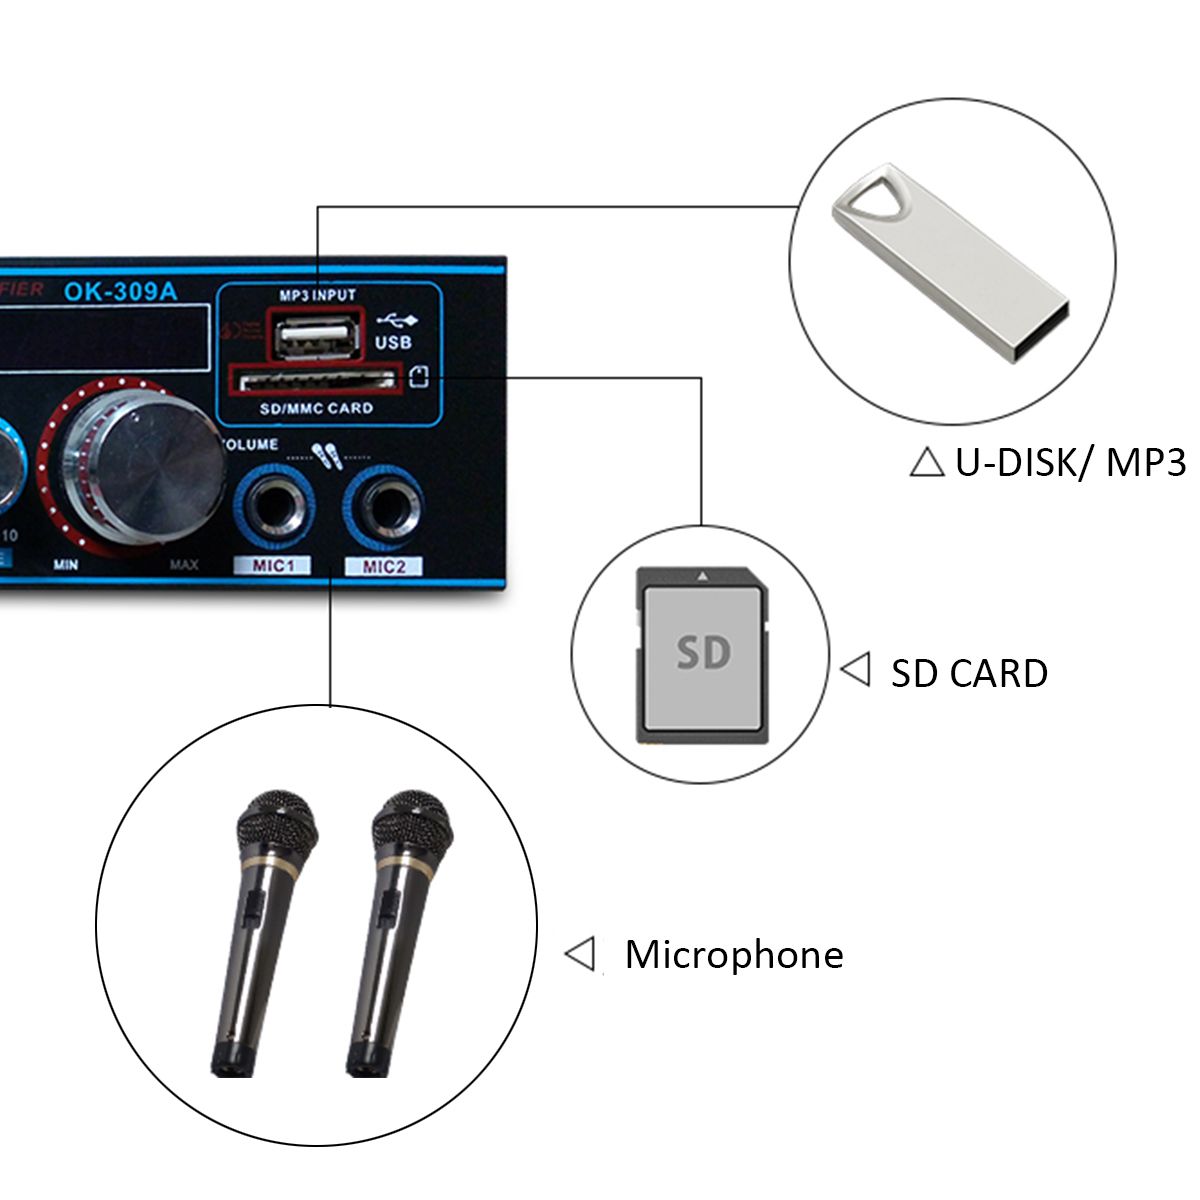 12V220V-HIFI-Audio-Stereo-Power-Amplifier-bluetooth-FM-Radio-Car-Home-Karaoke-1369920